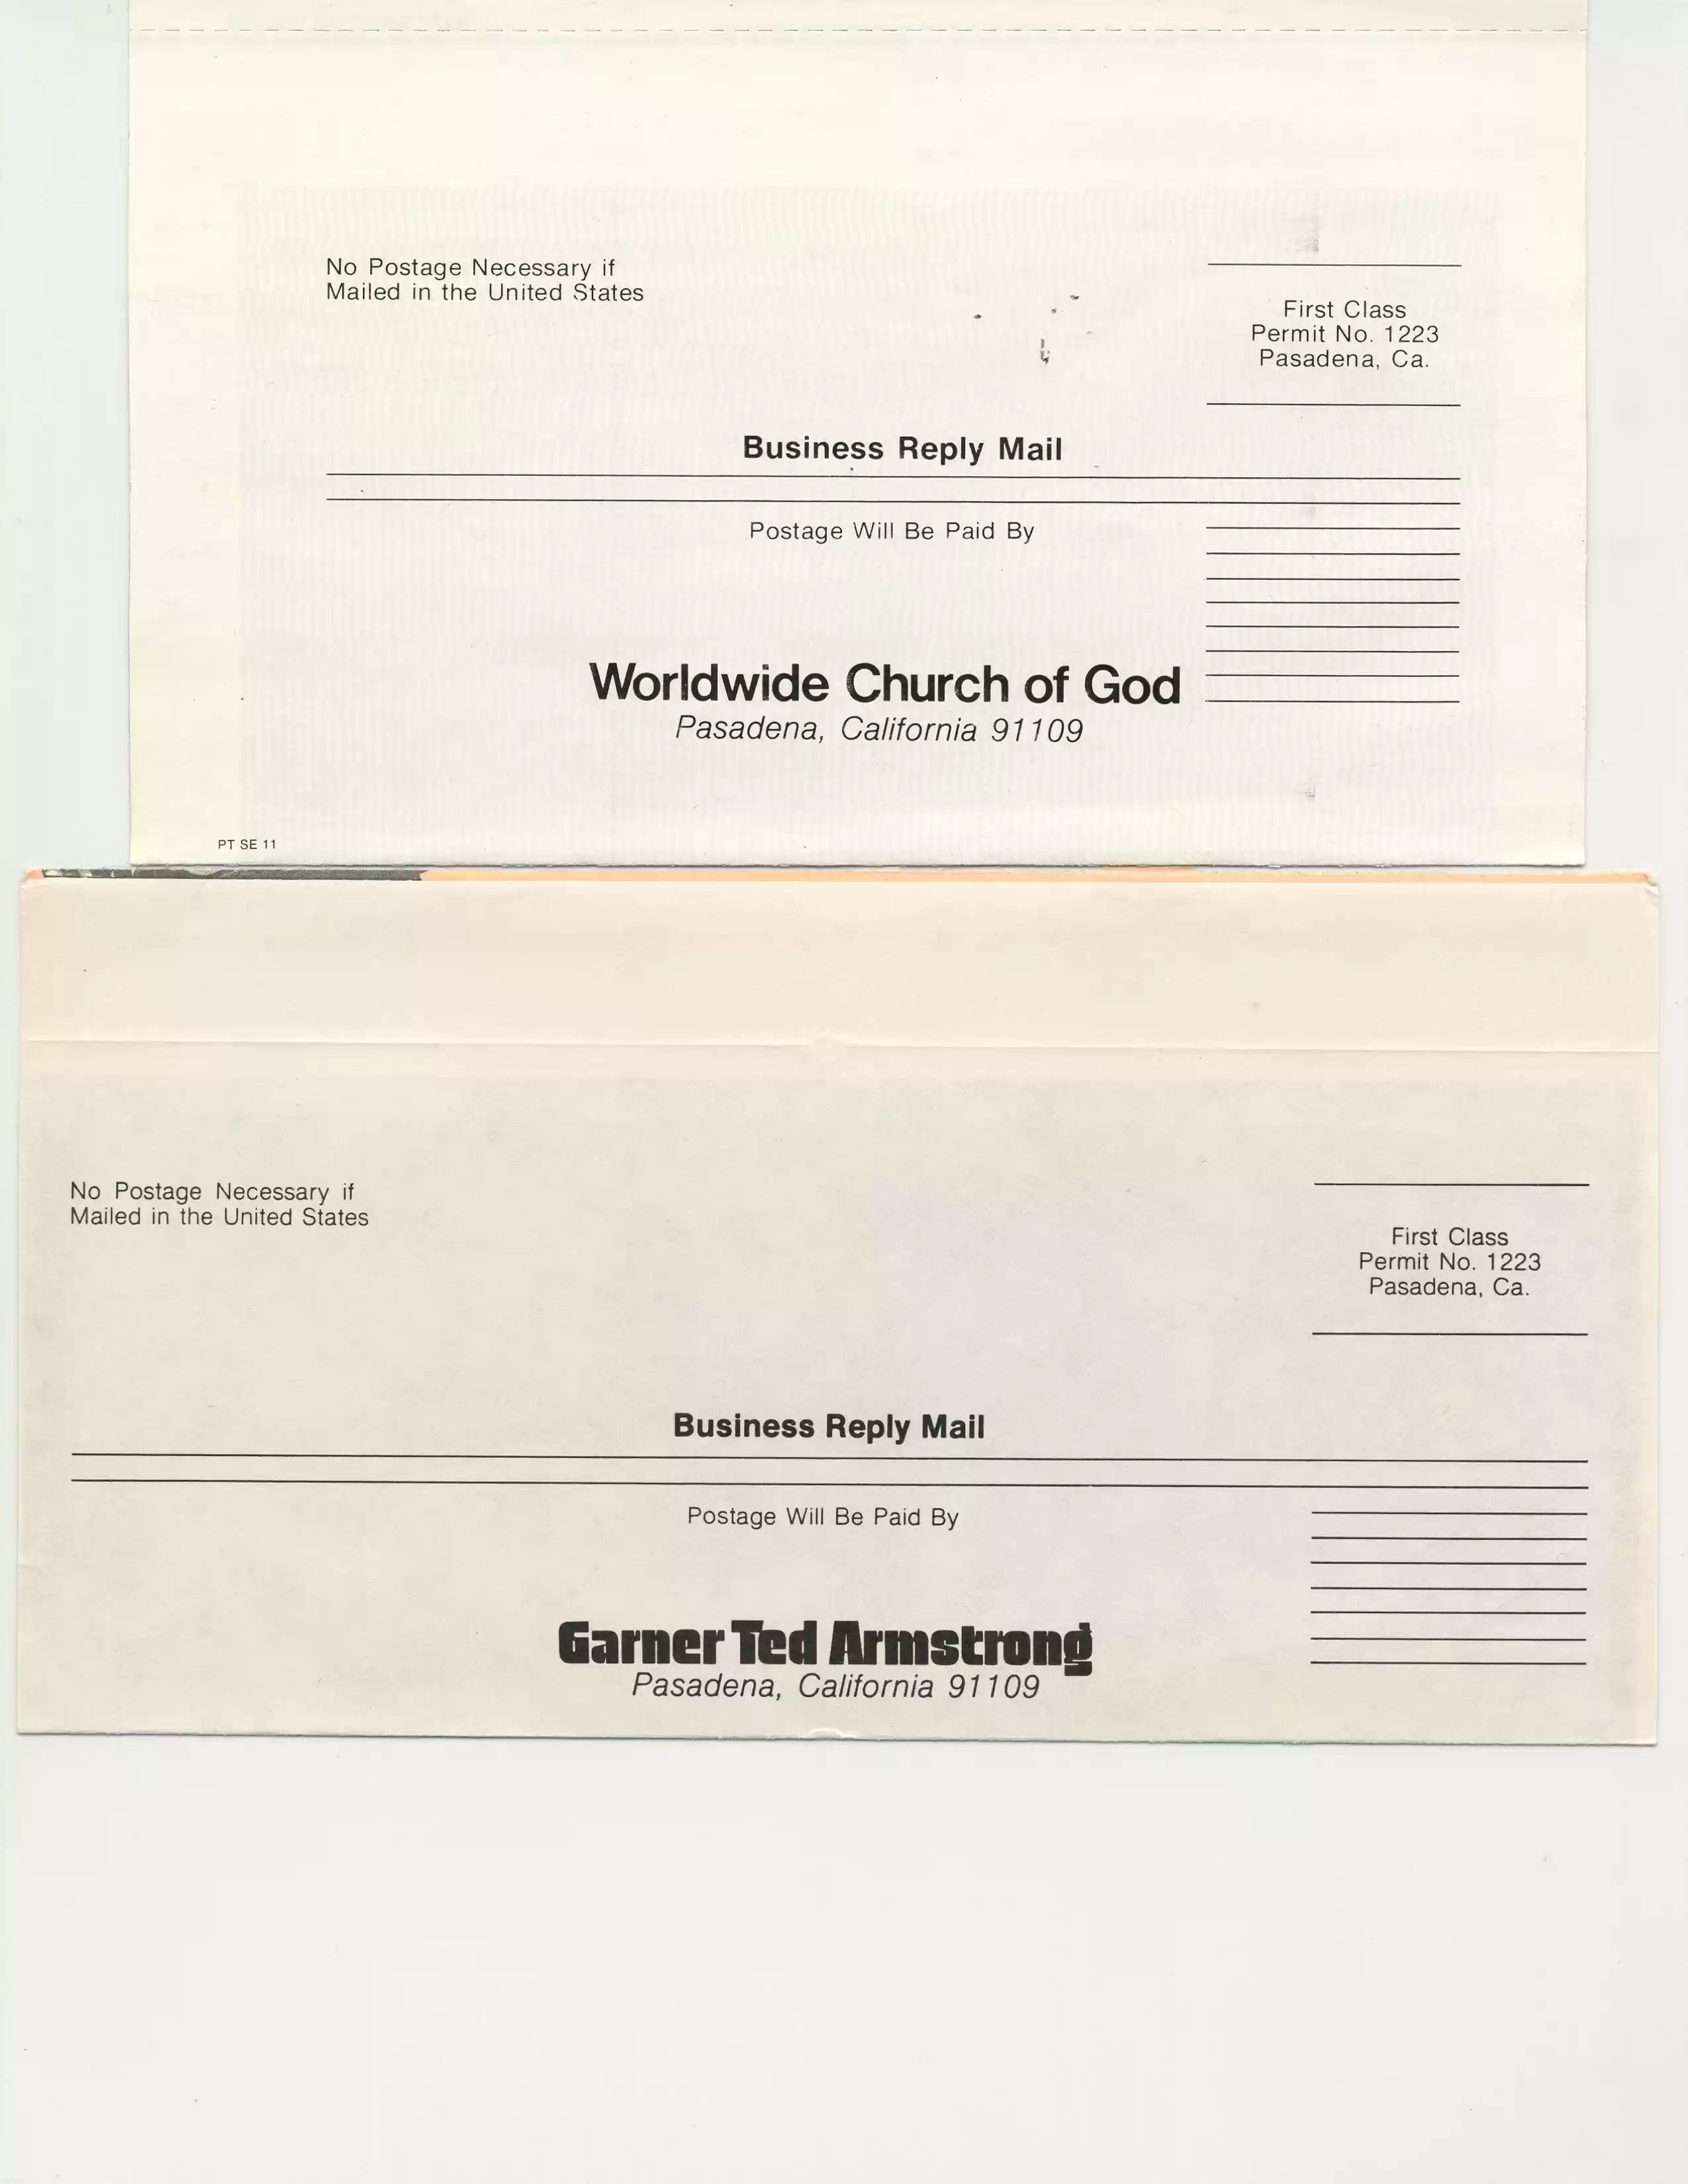 WCG lit request envelopes, n.d. but probably ~1977-8